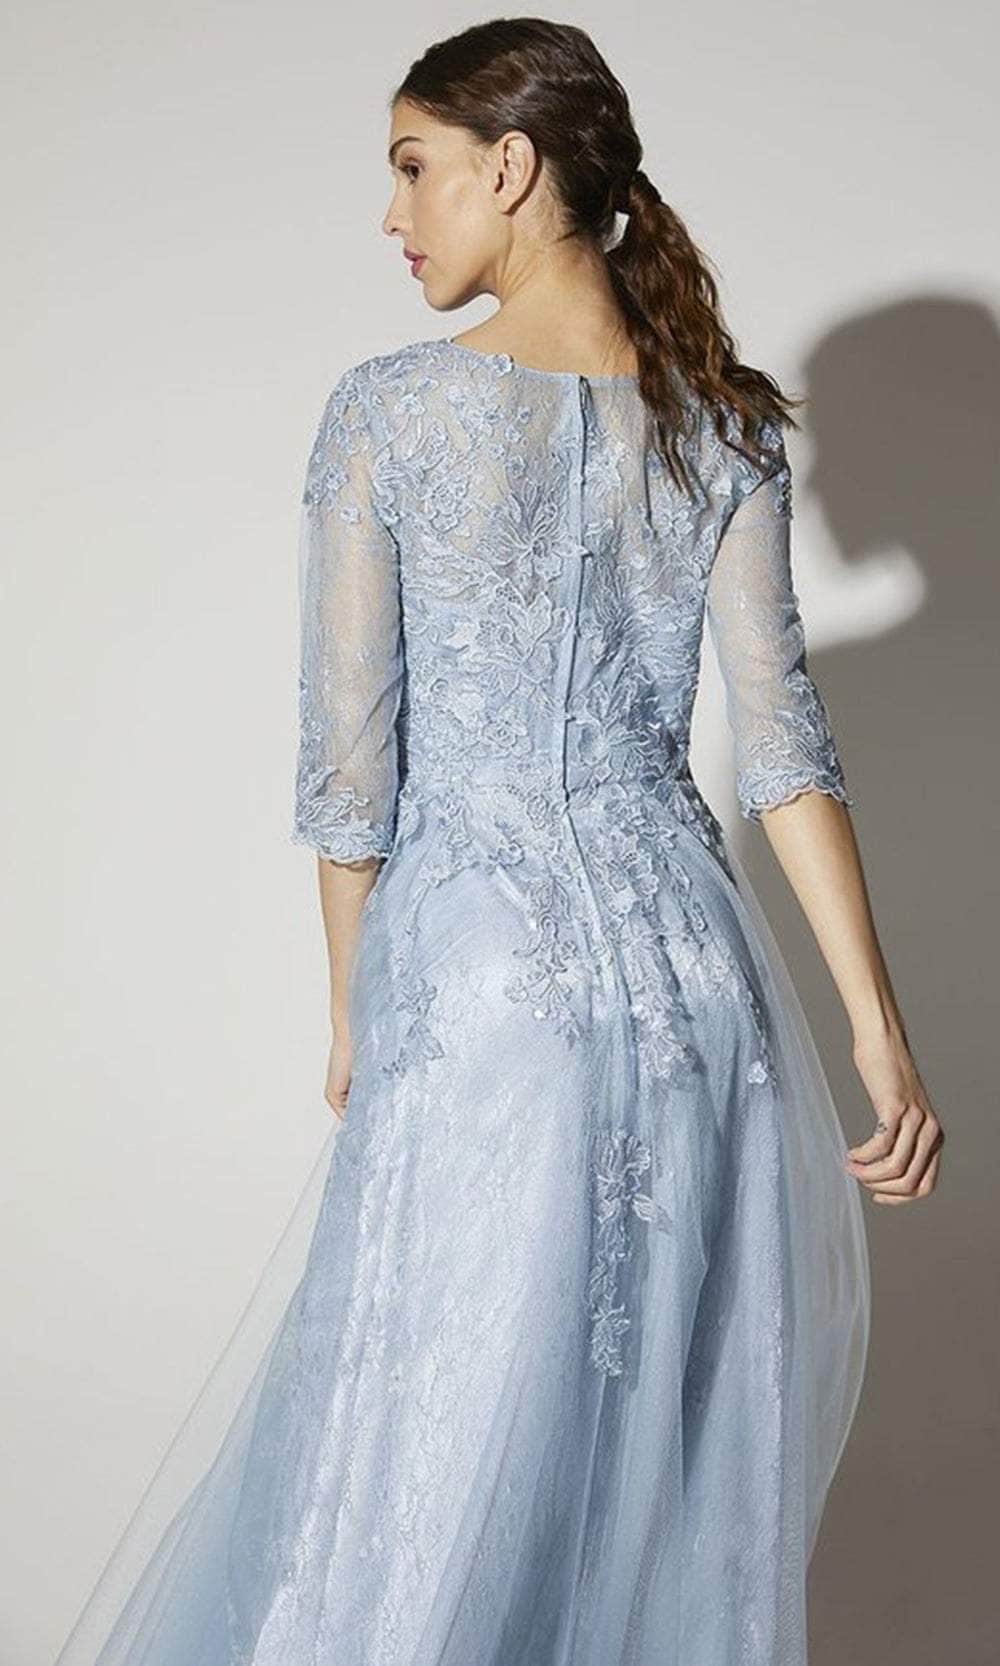 Eureka Fashion 9660 - Quarter Sleeved A-Line Formal Gown Mother of the Bride Dresses